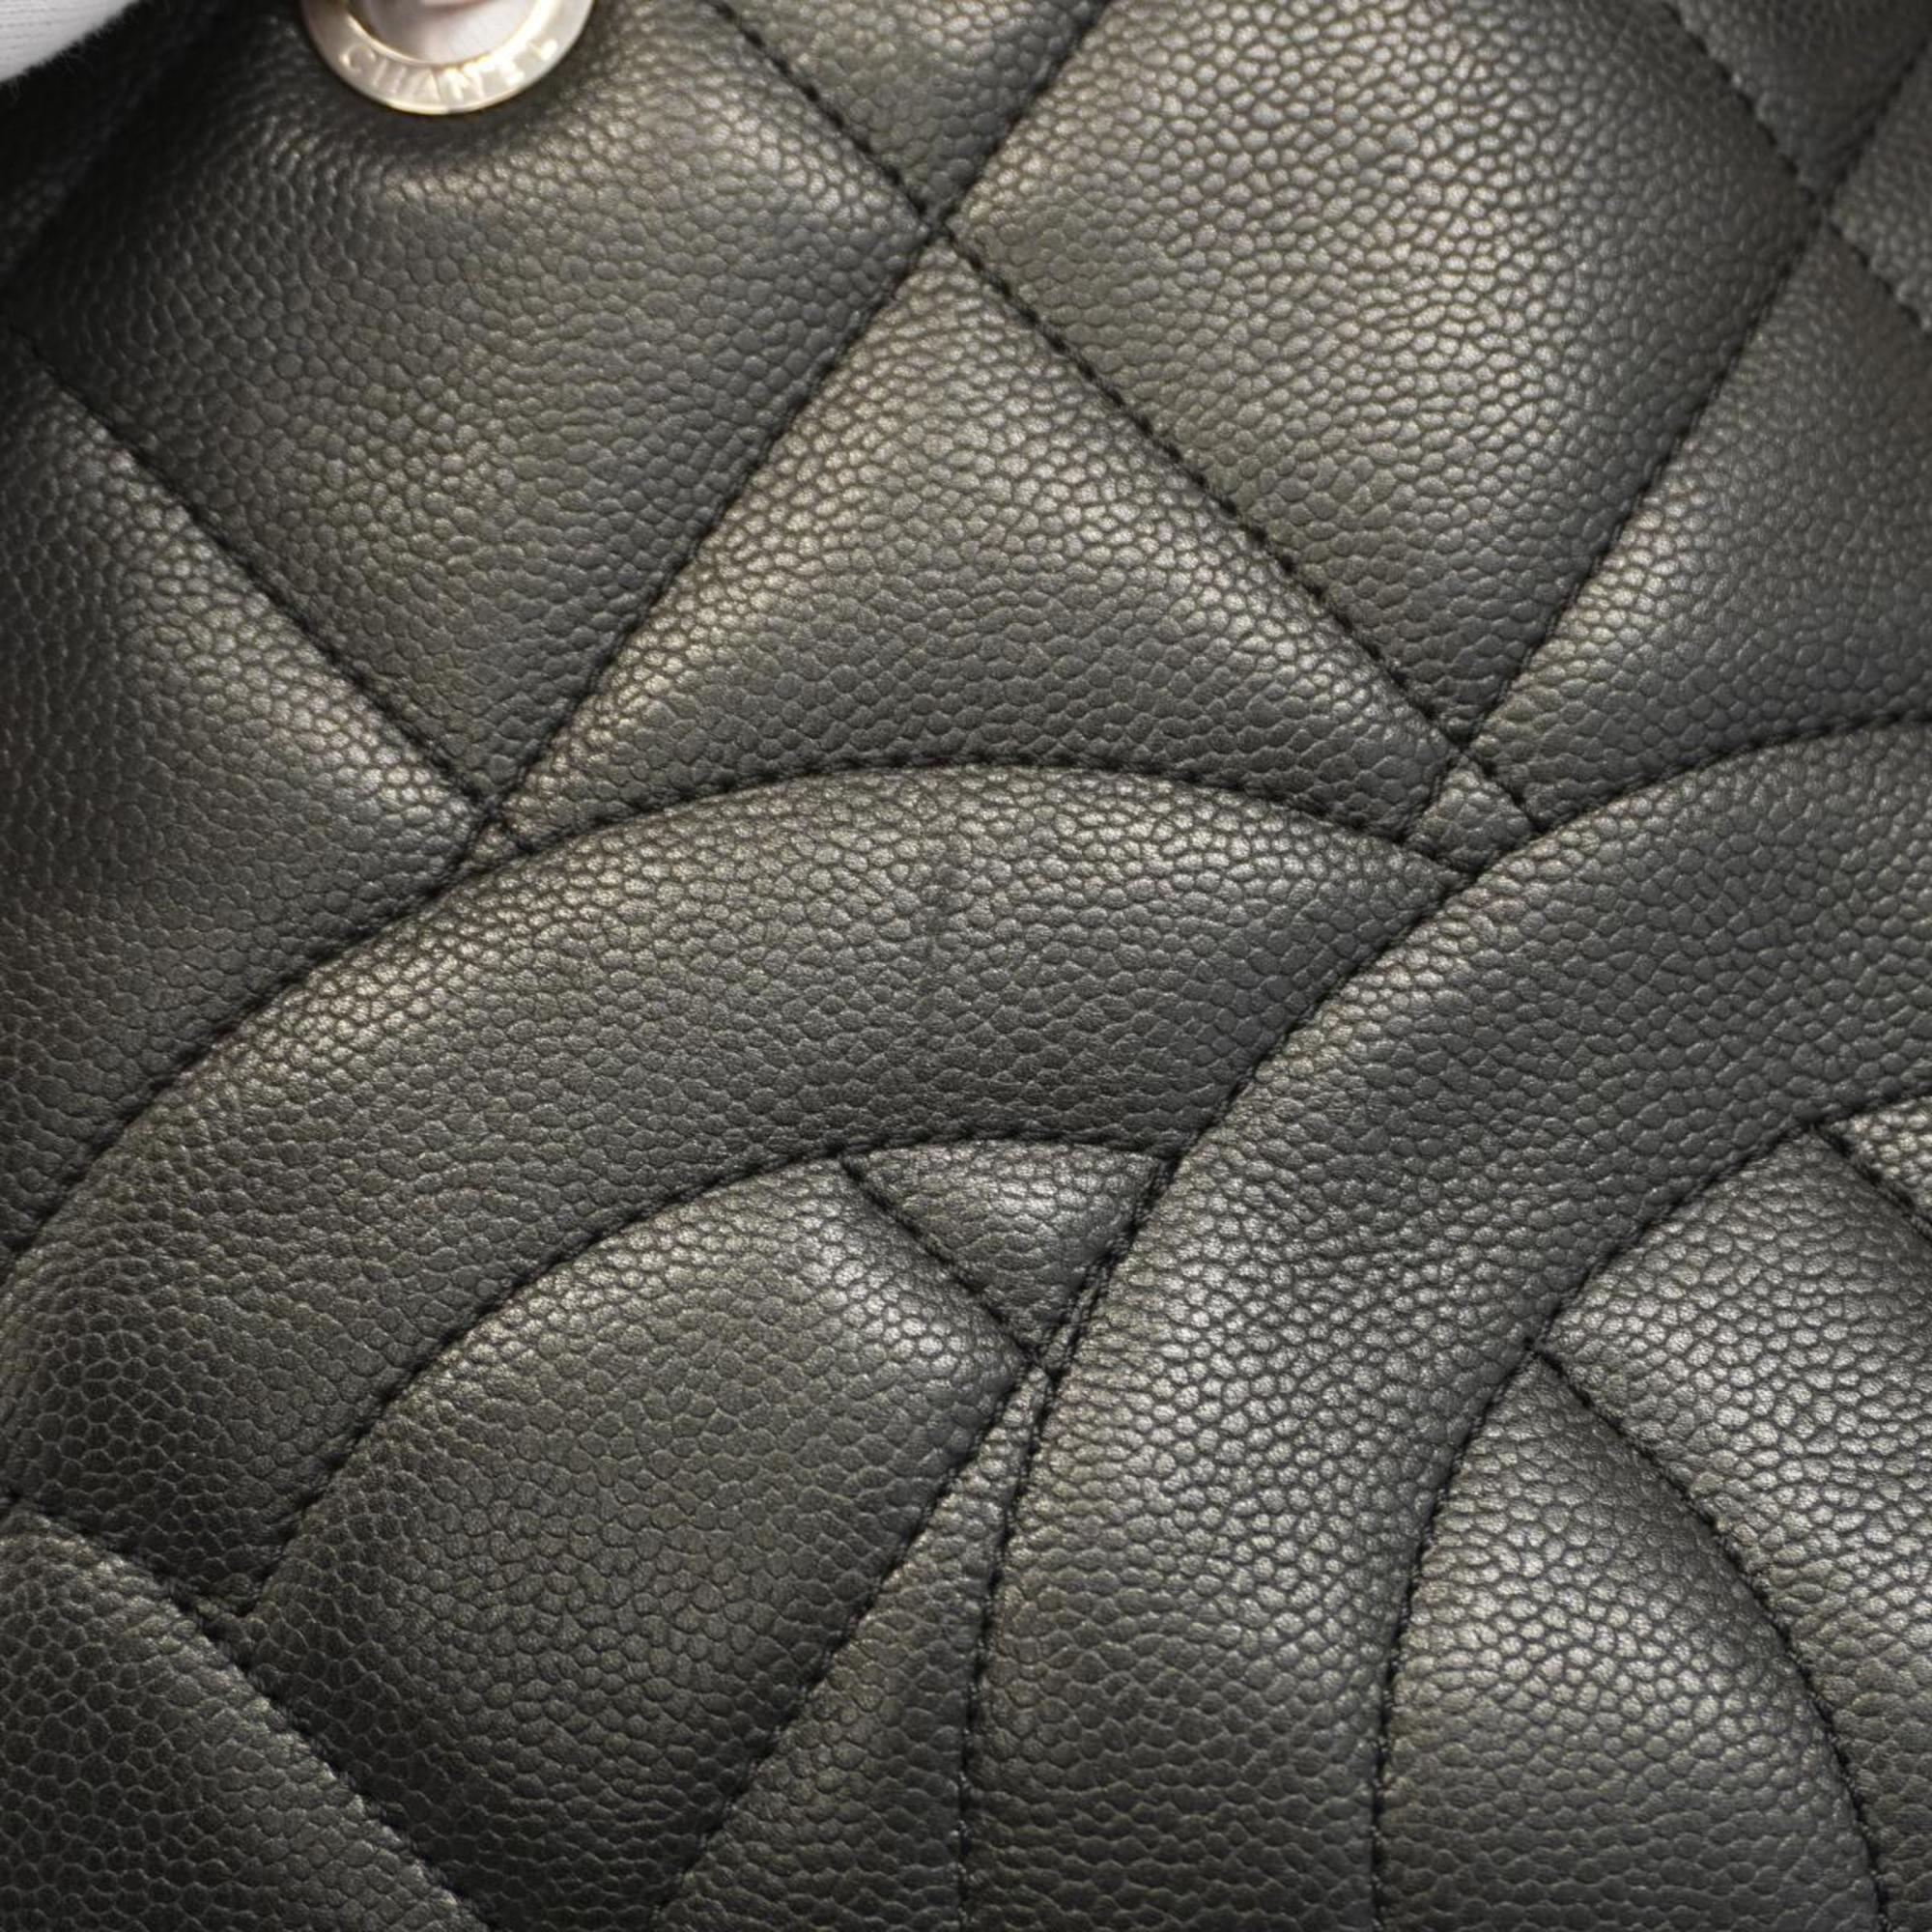 Chanel handbag, Matelasse, caviar skin, black, for men and women